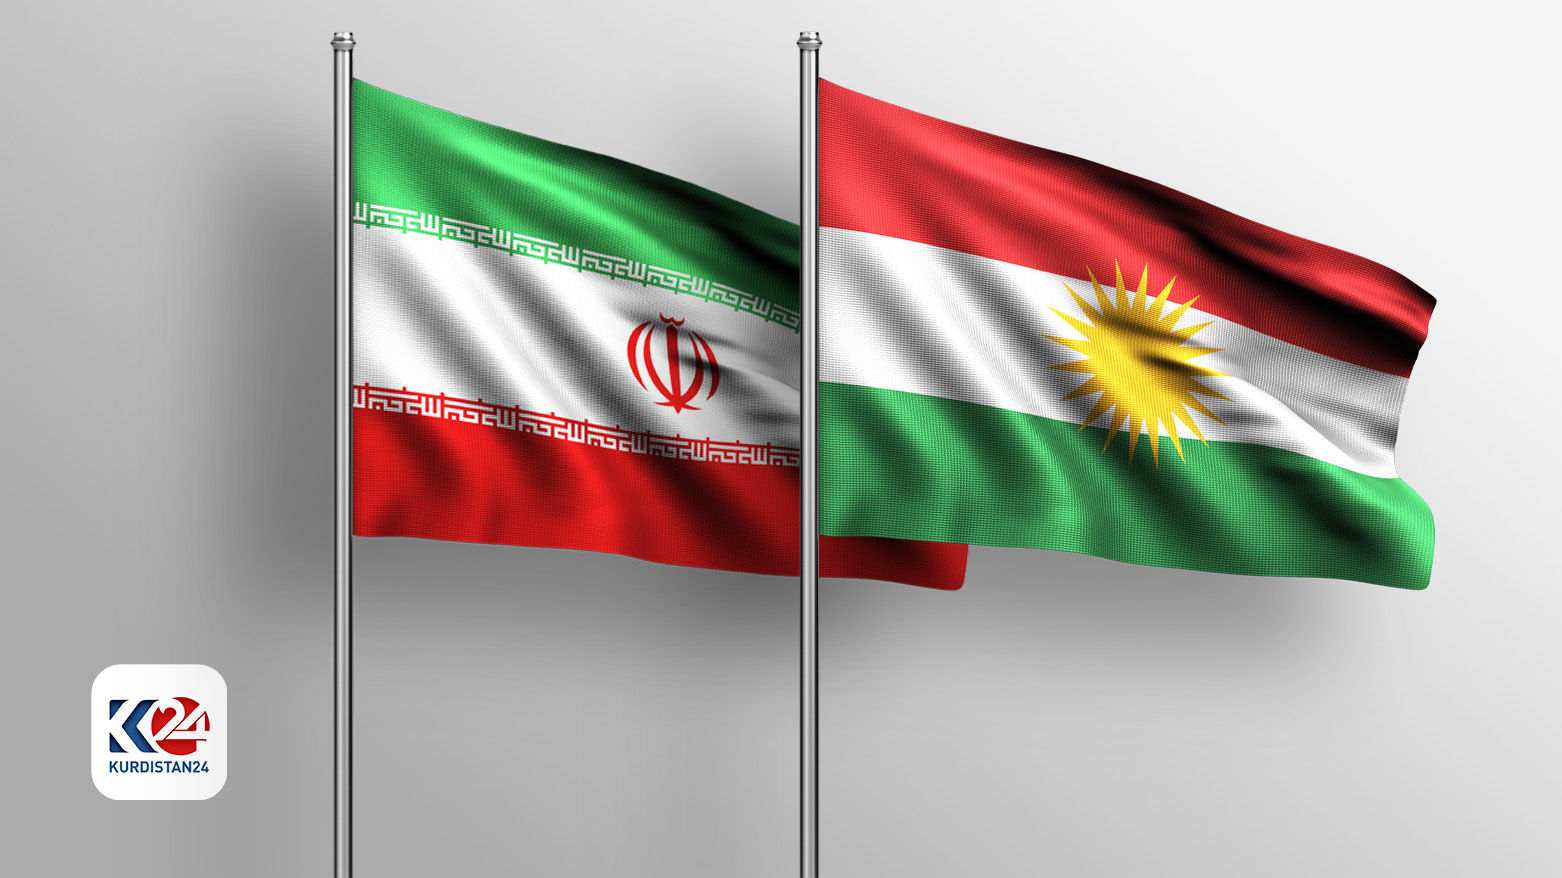 The flags of Kurdistan Region (right) and Iran. (Photo: Designed by Kurdistan24)